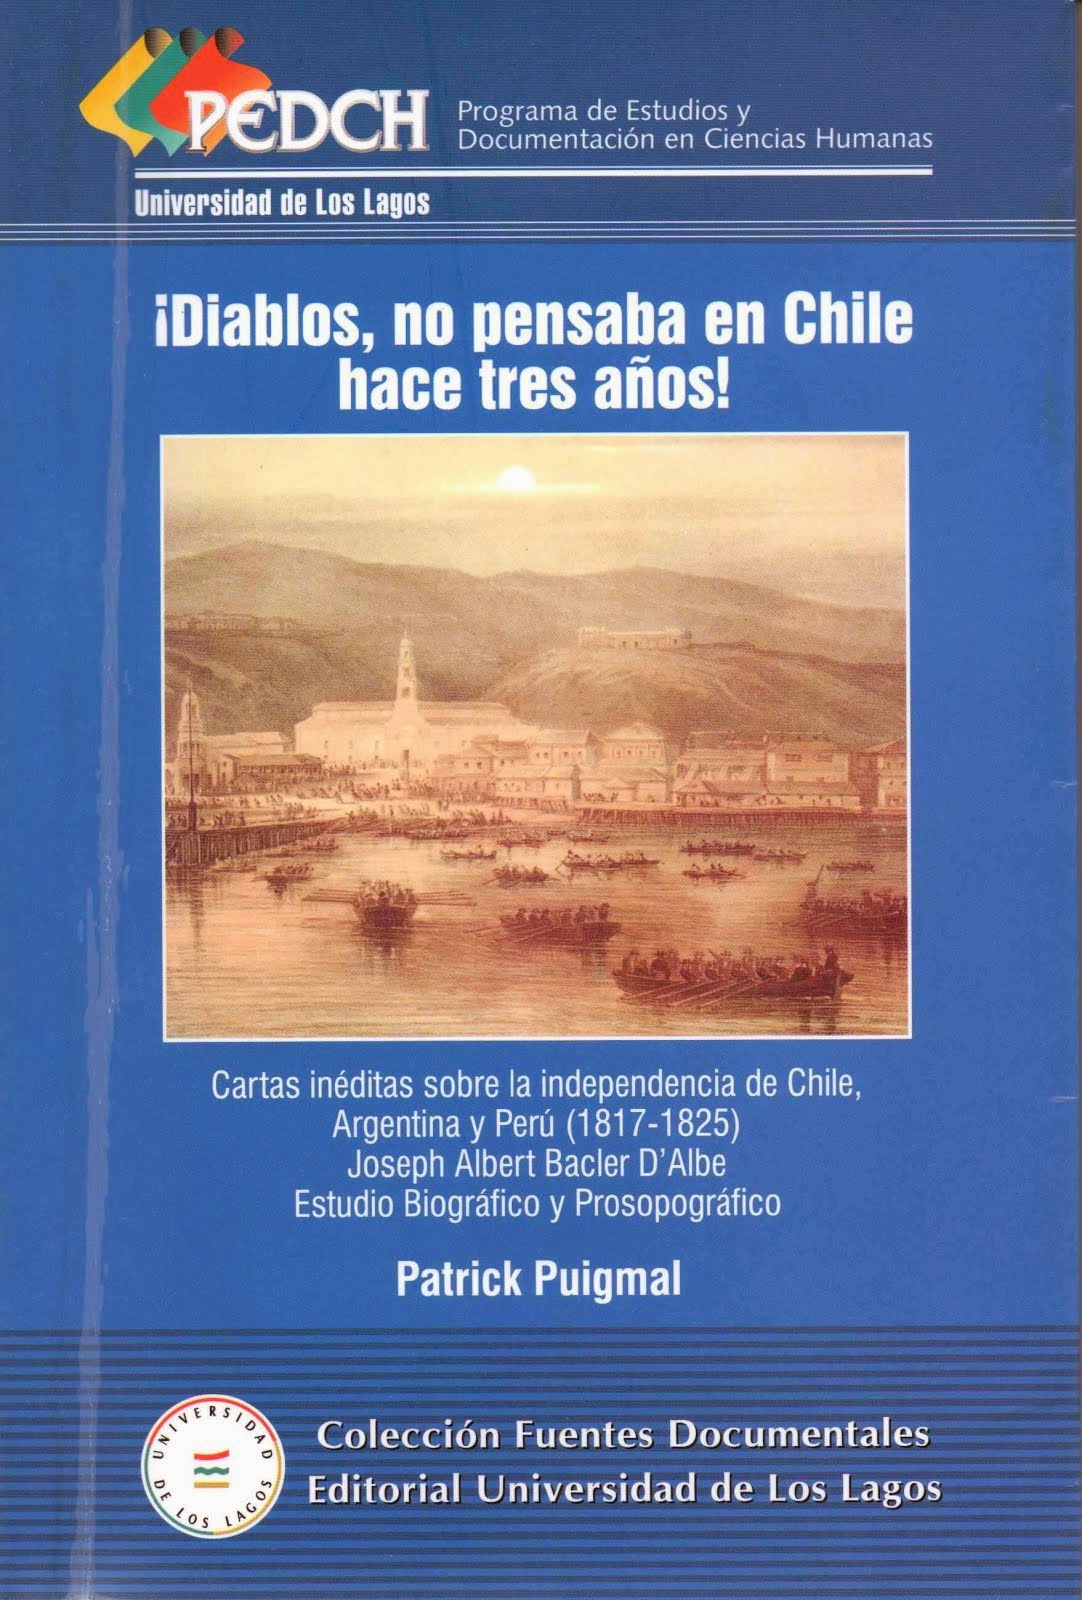 Cartas ineditas sobre Independencia de Chile de Joseph Bacler d'Albe